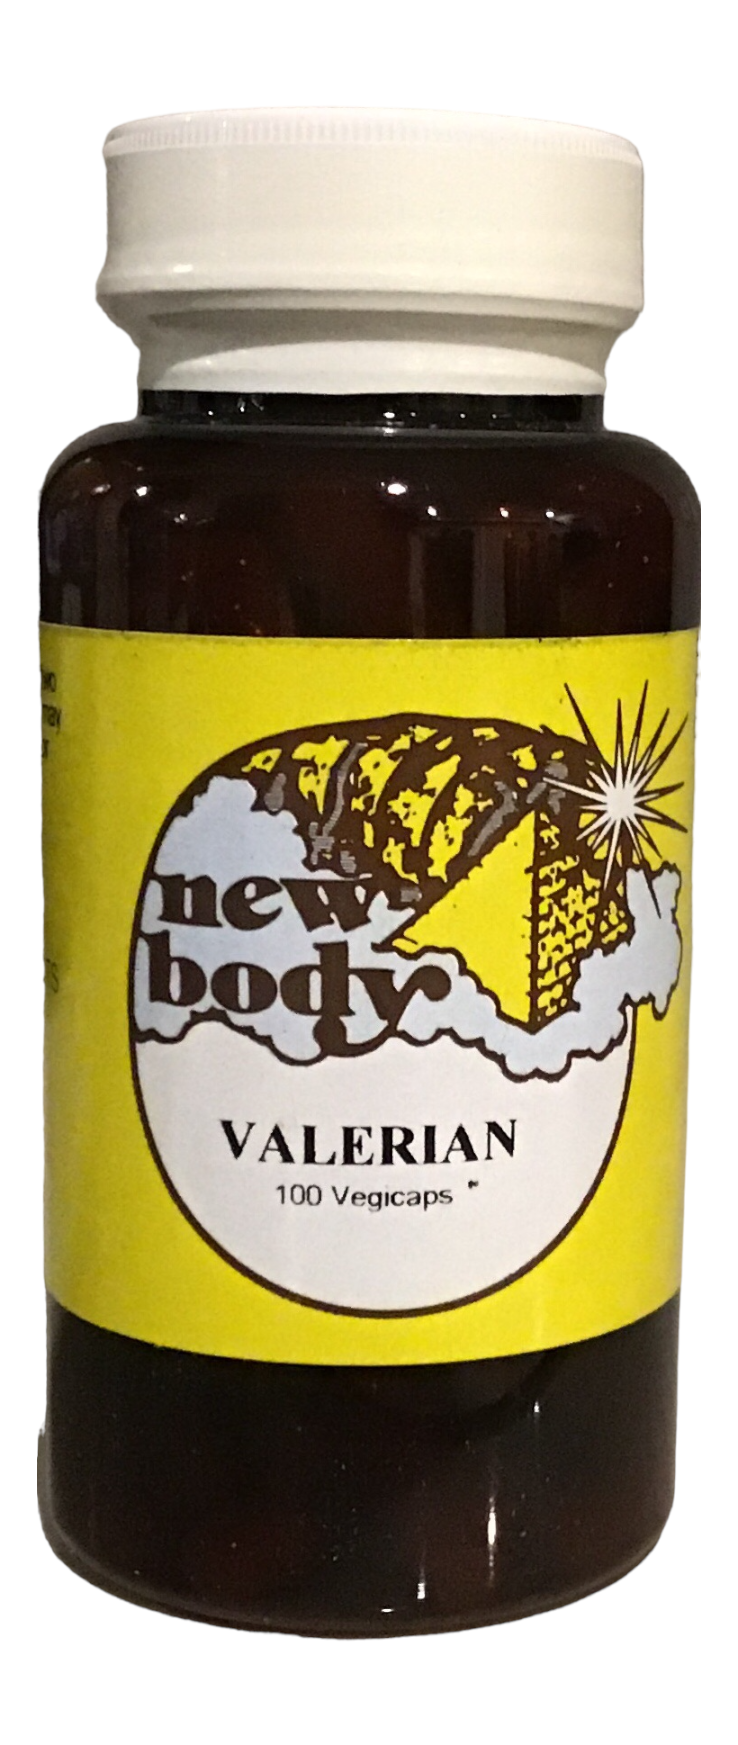 New Body Valerian